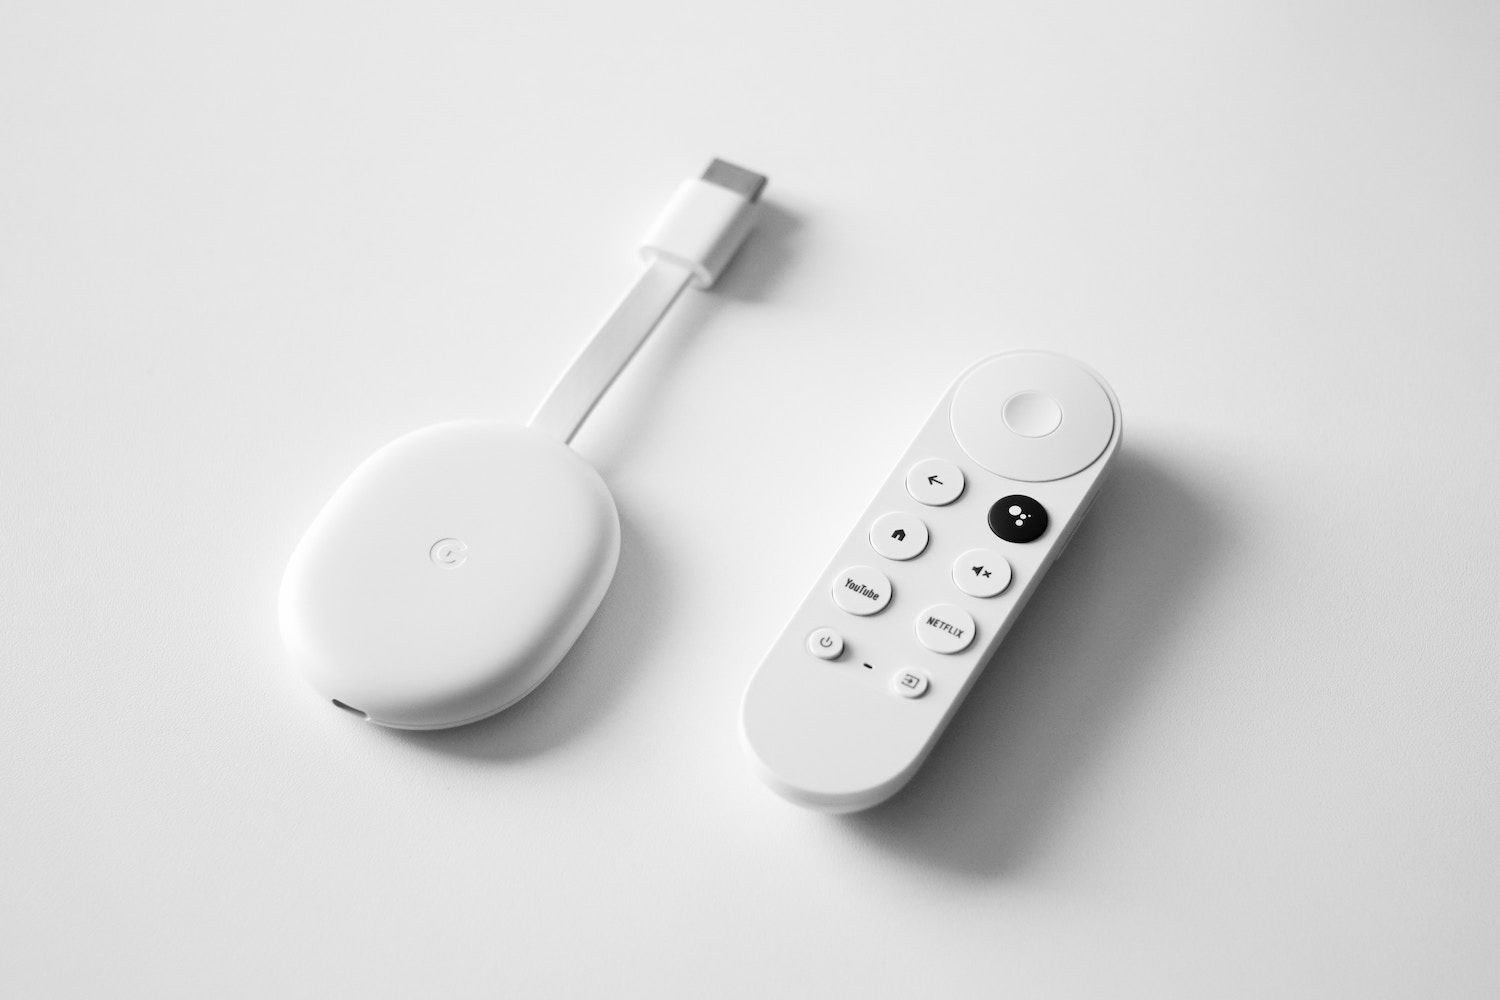 Google Chromecast TV (HD) - Transmisión de Entretenimiento en tu telev